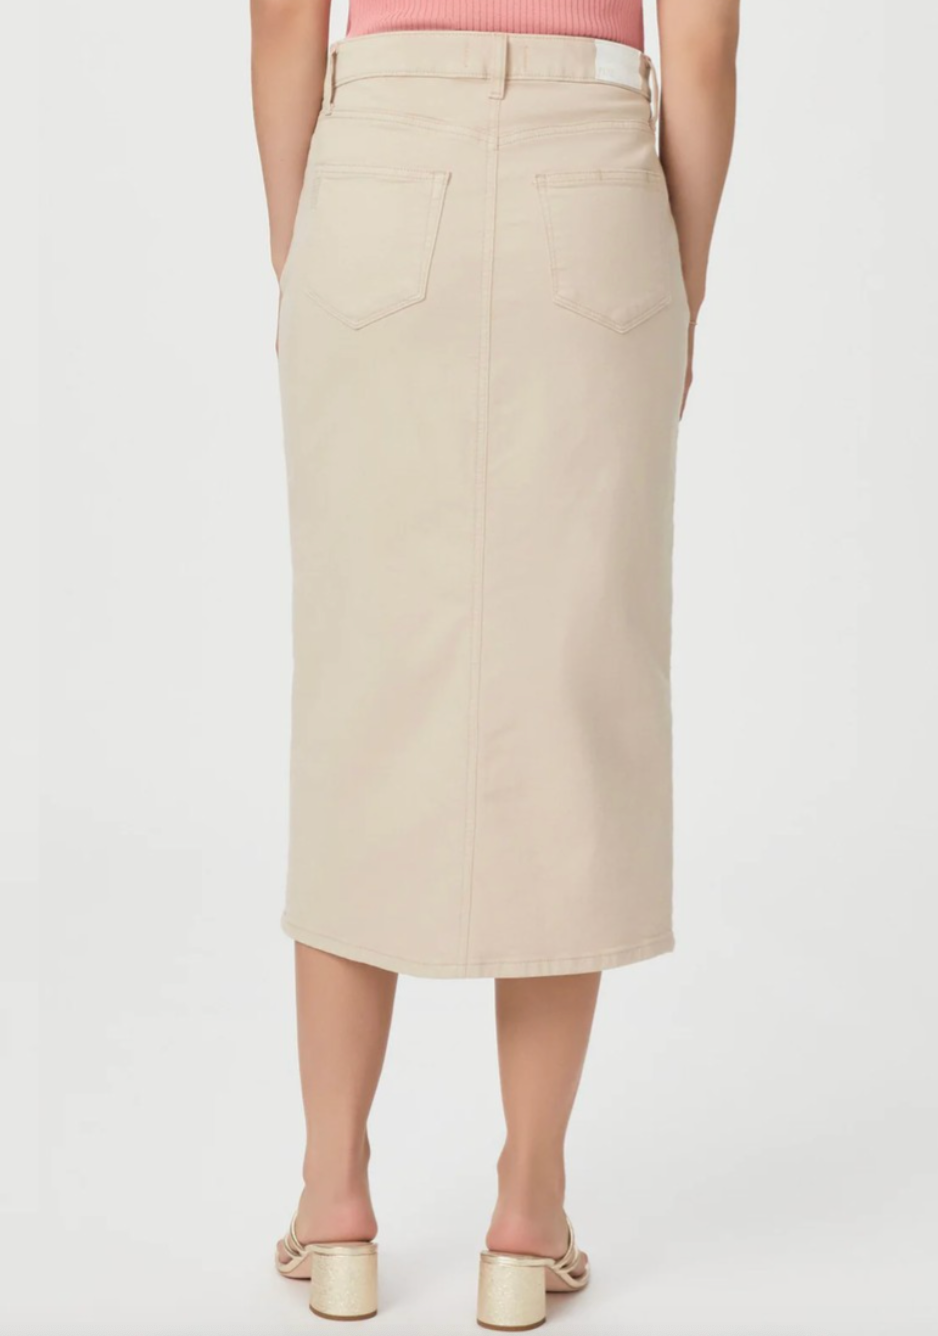 Straight cut beige denim skirt with front split rear view